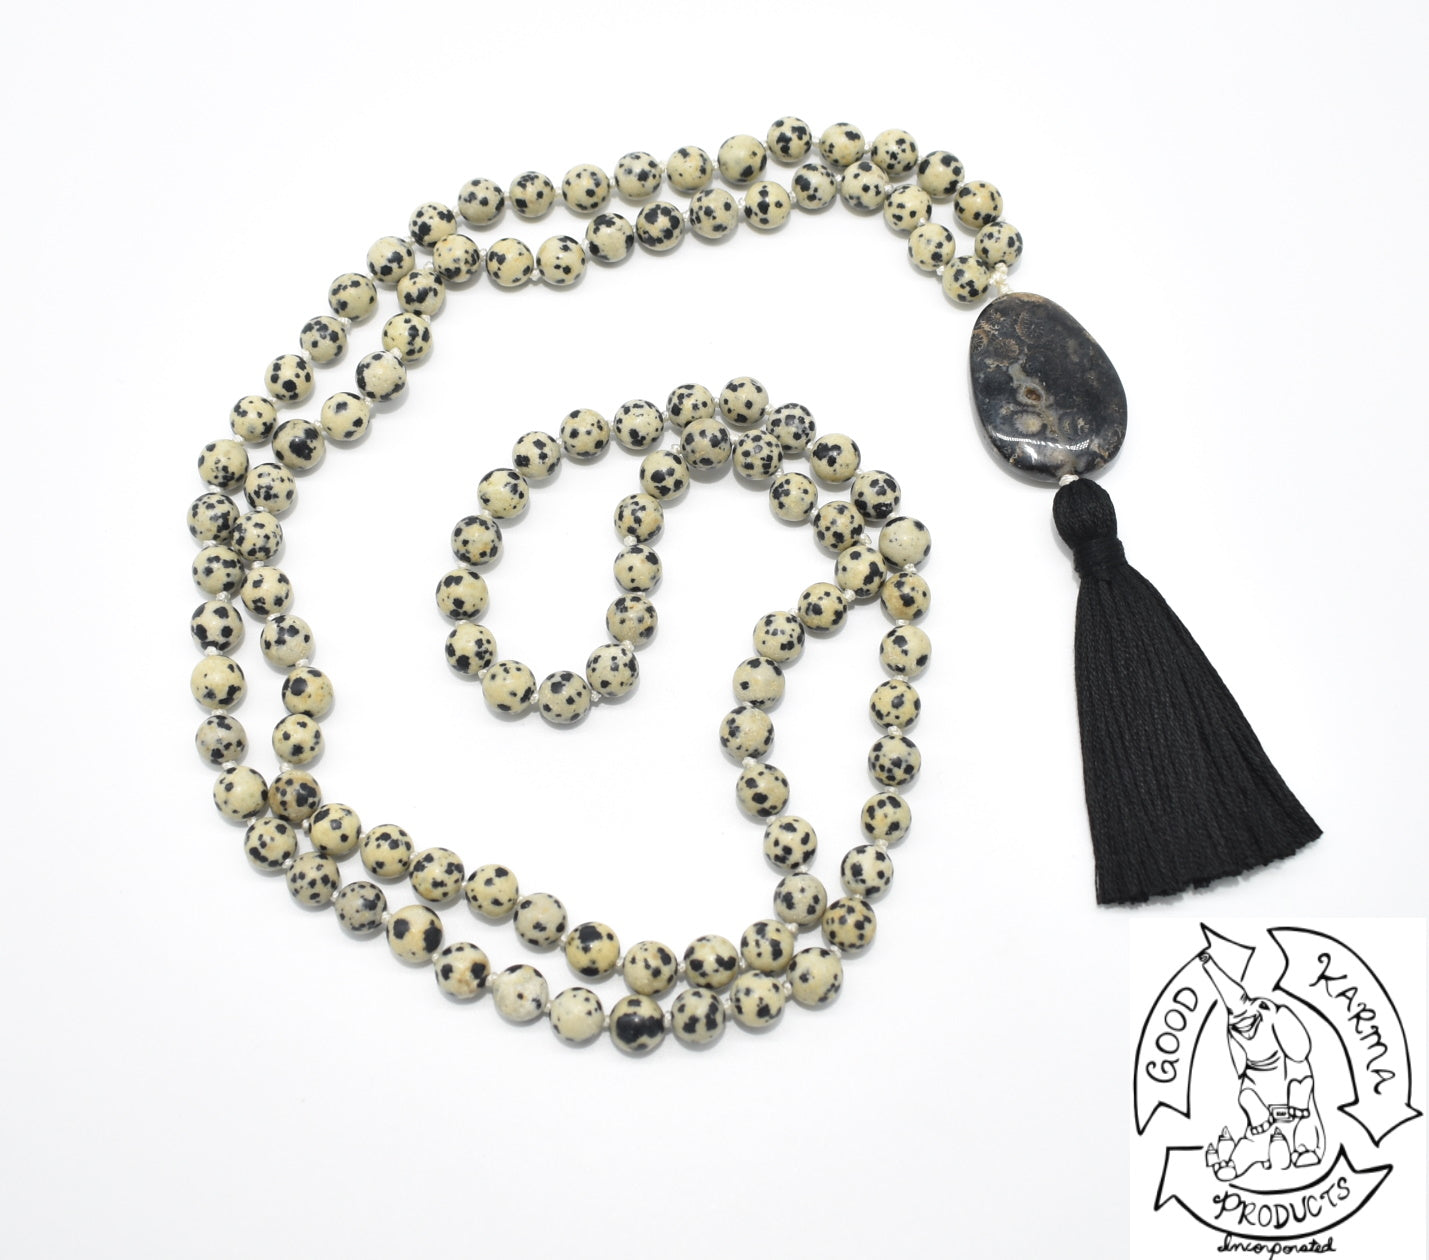 Dalmatian Stone Handmade Mala with 108 Stone Beads